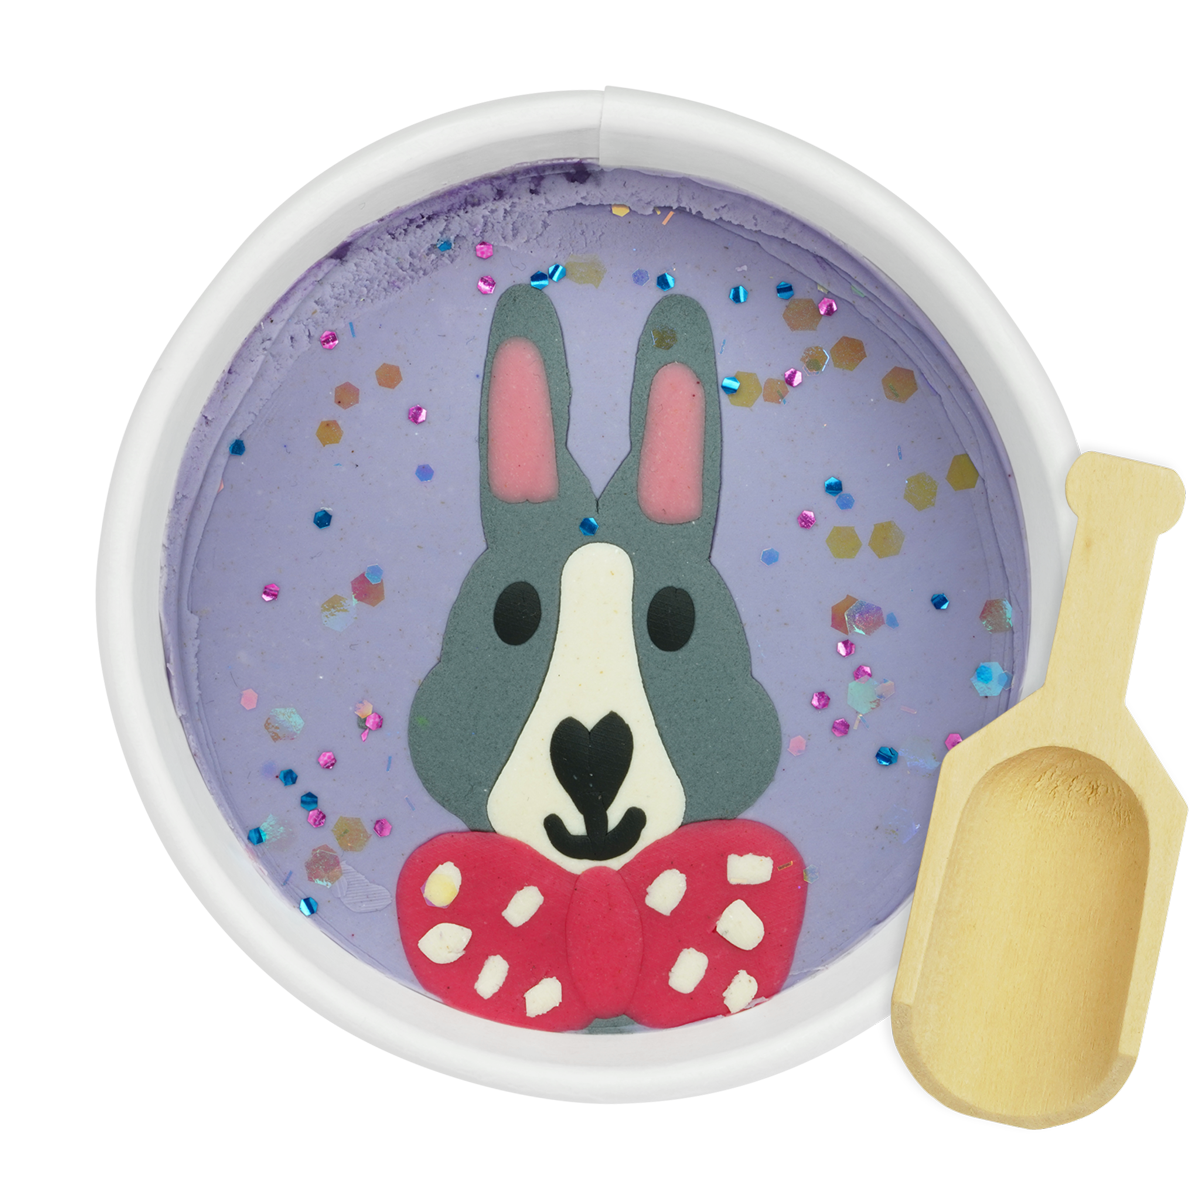 Bowtie Bunny Modeling Dough